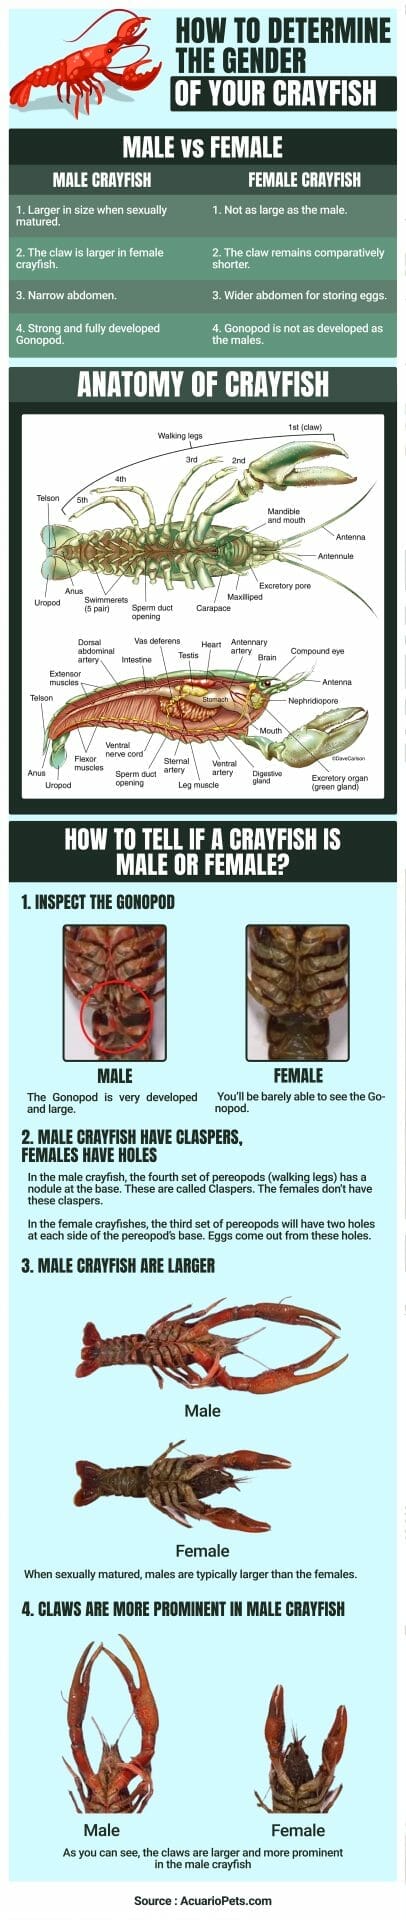 how to determine crayfish gender infographic